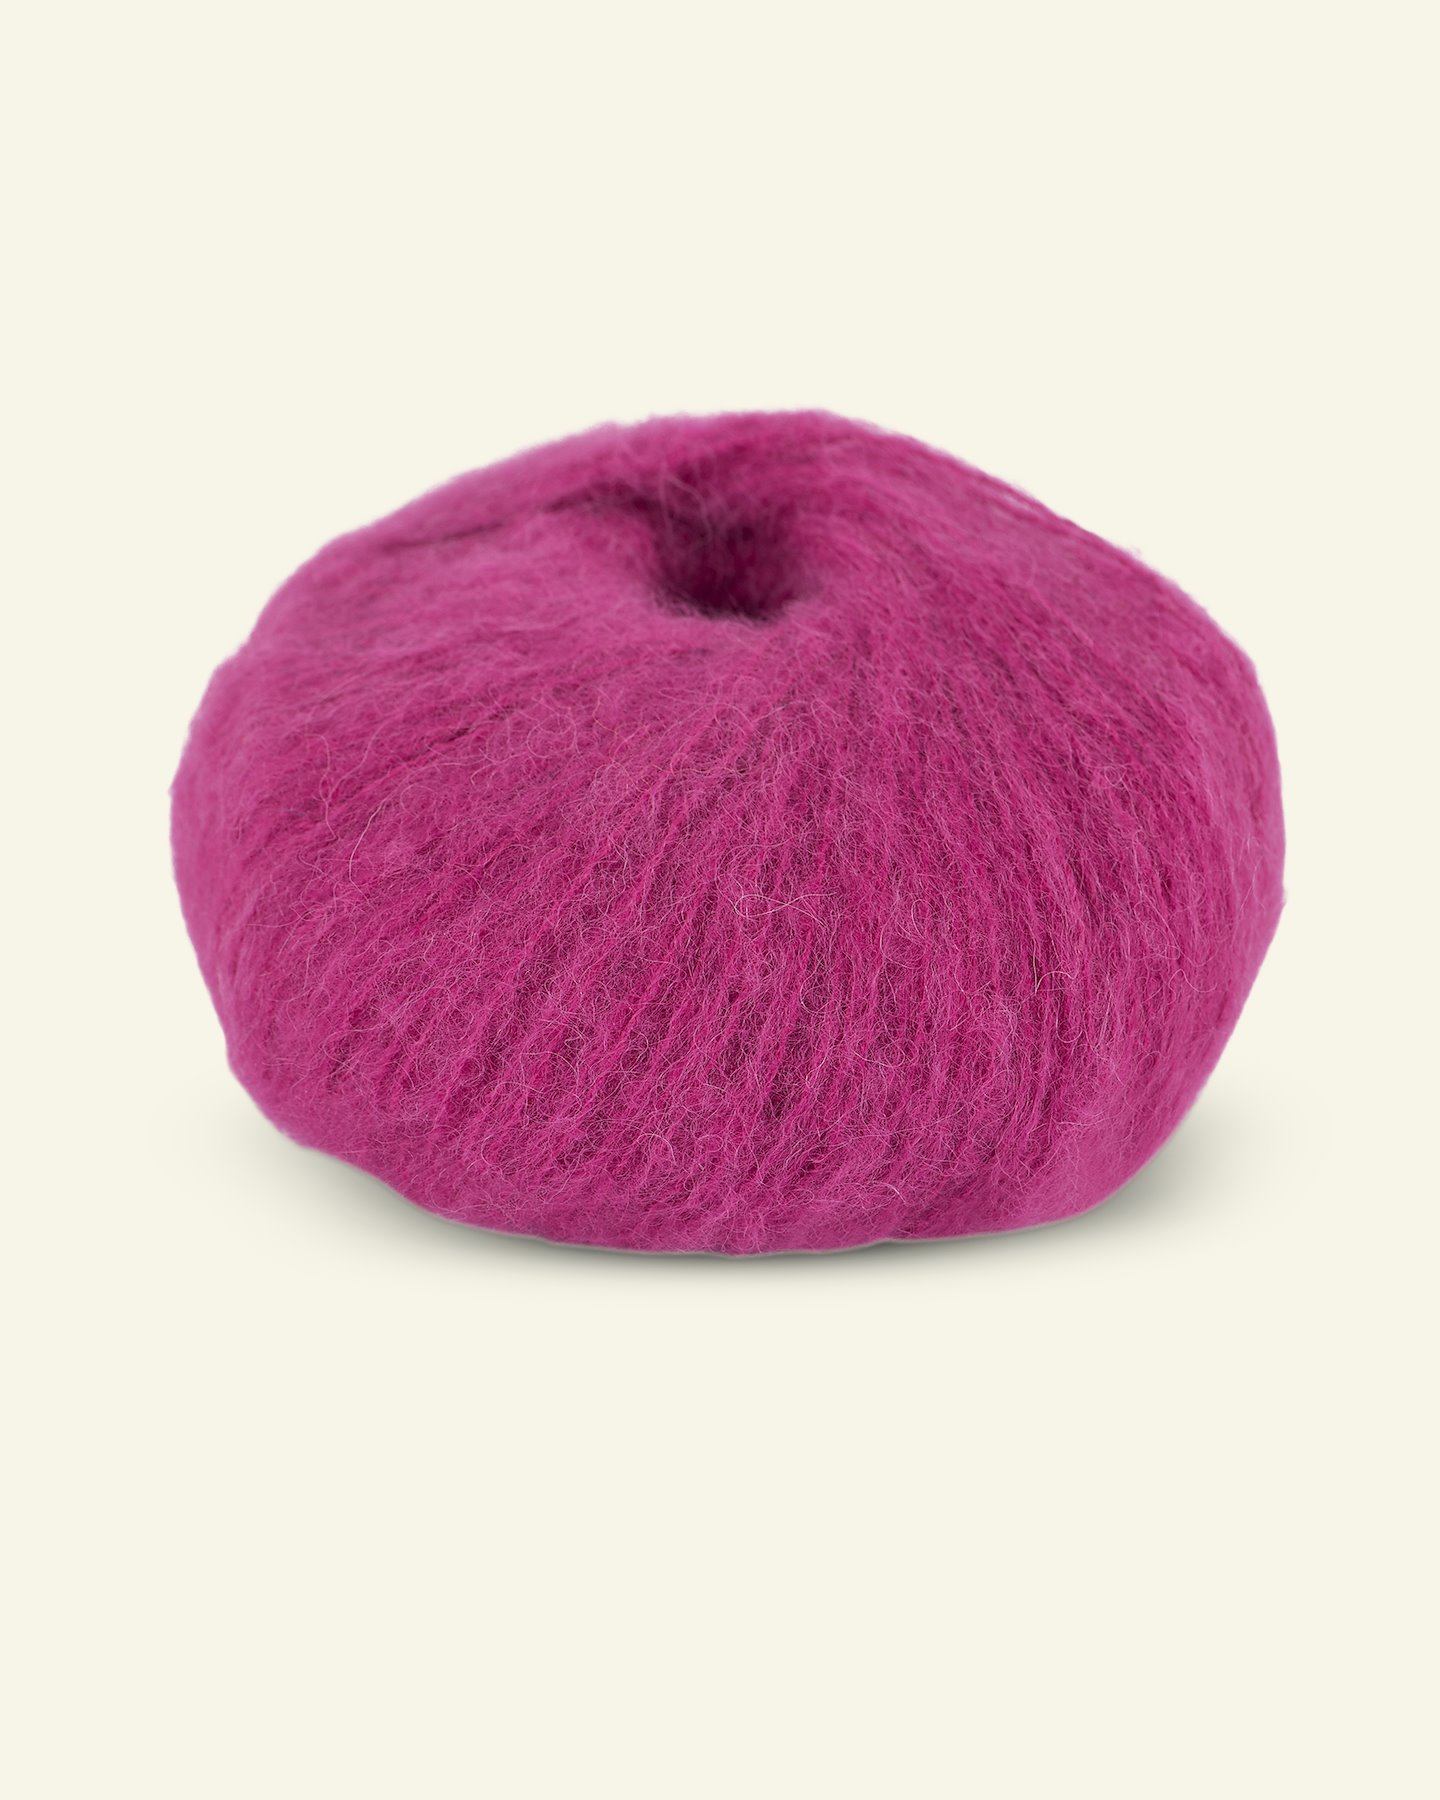 Du Store Alpakka, airy alpaca yarn "Faerytale", pink (813) 90000620_pack